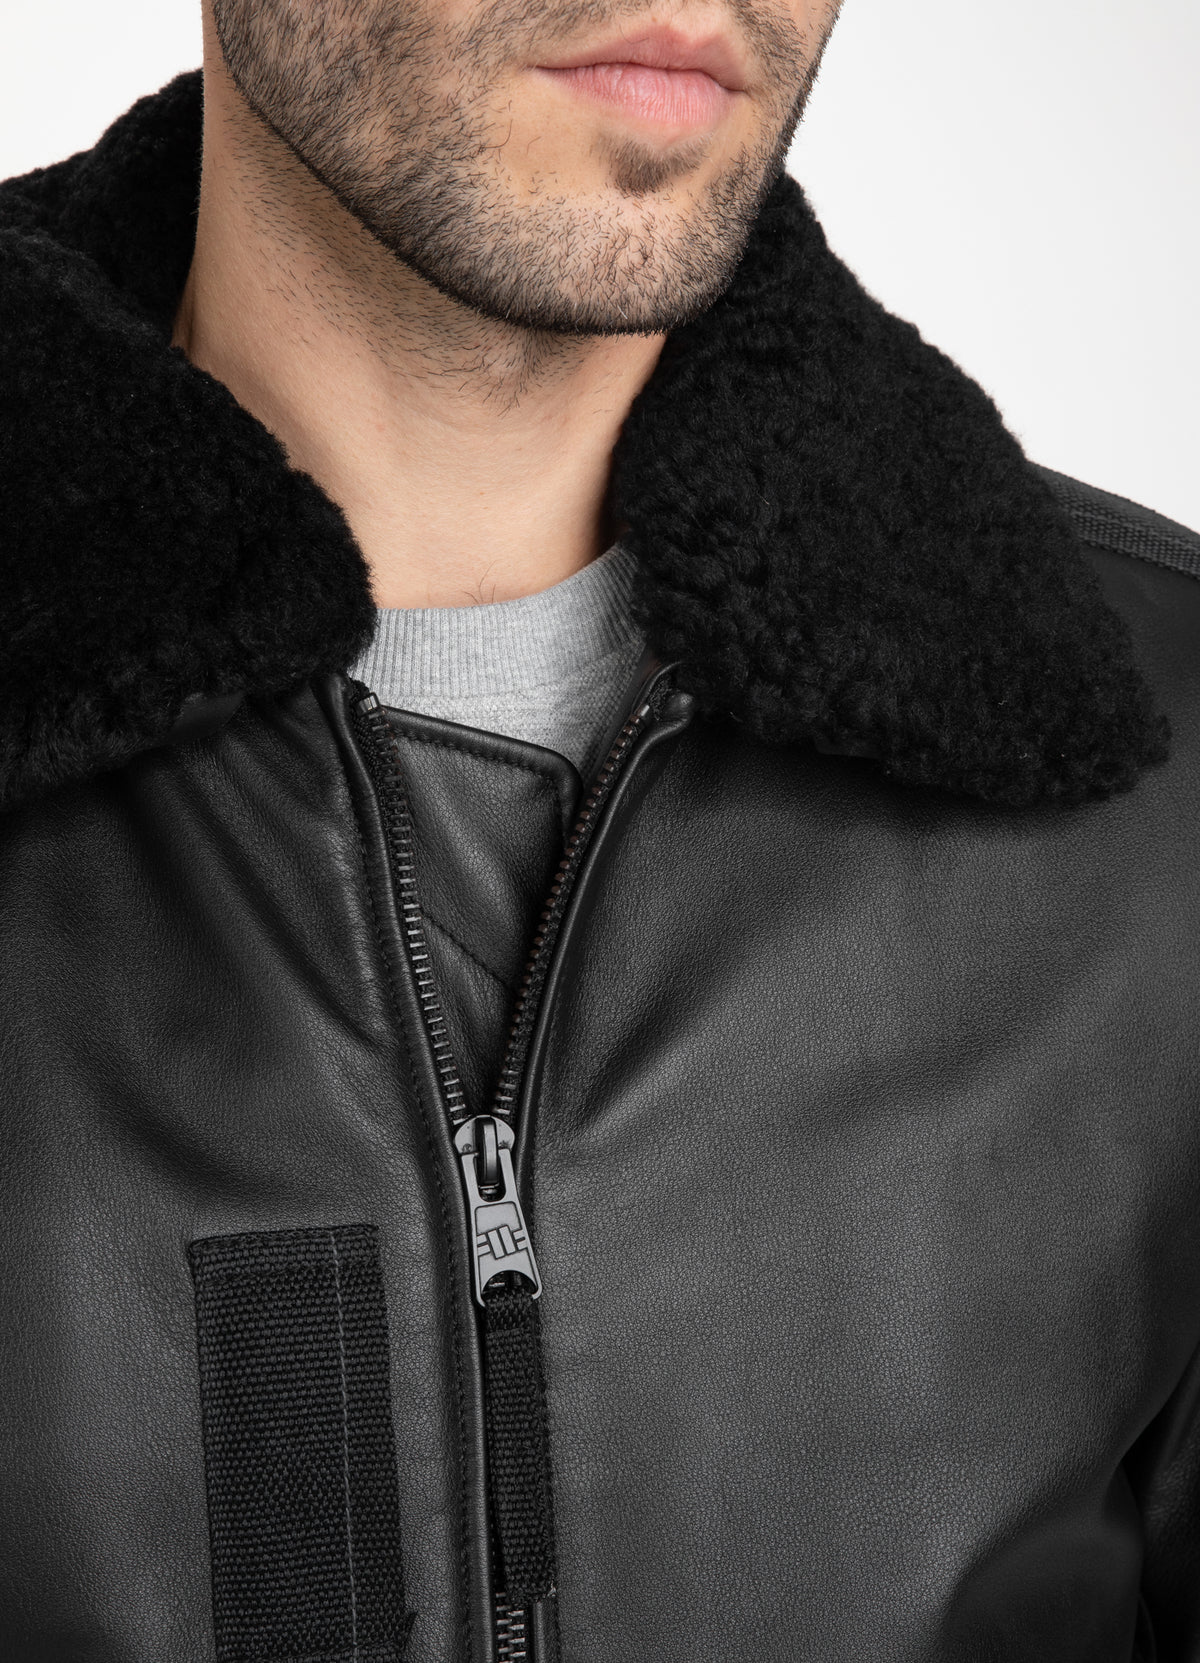 Leather Jacket BRANDO Black - Pitbull West Coast International Store 